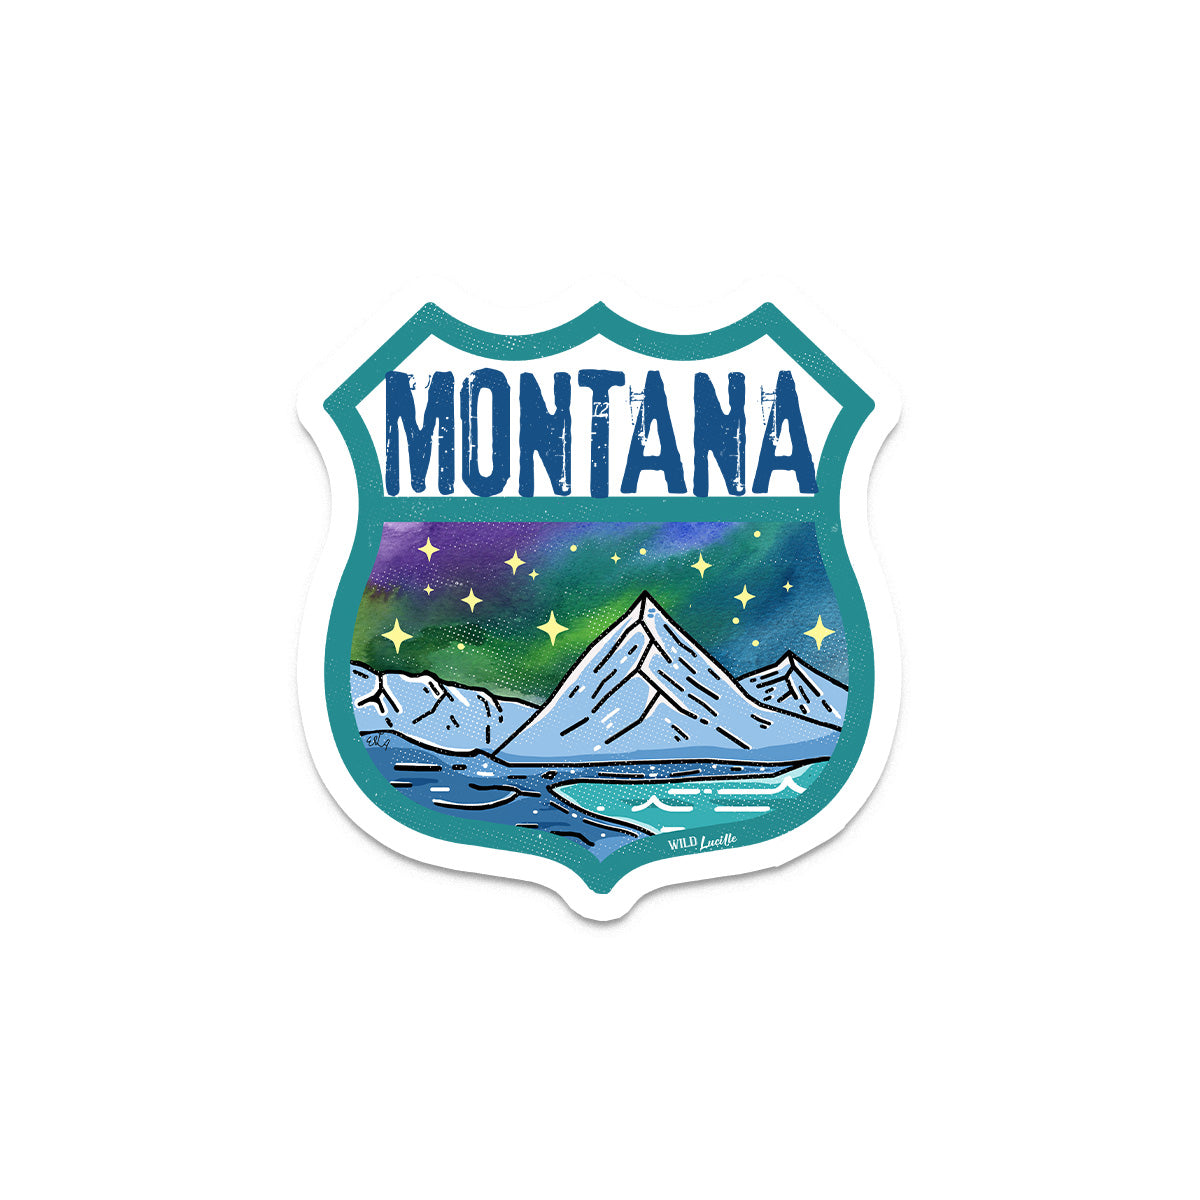 Destination Montana - Vinyl Souvenir Sticker Decals